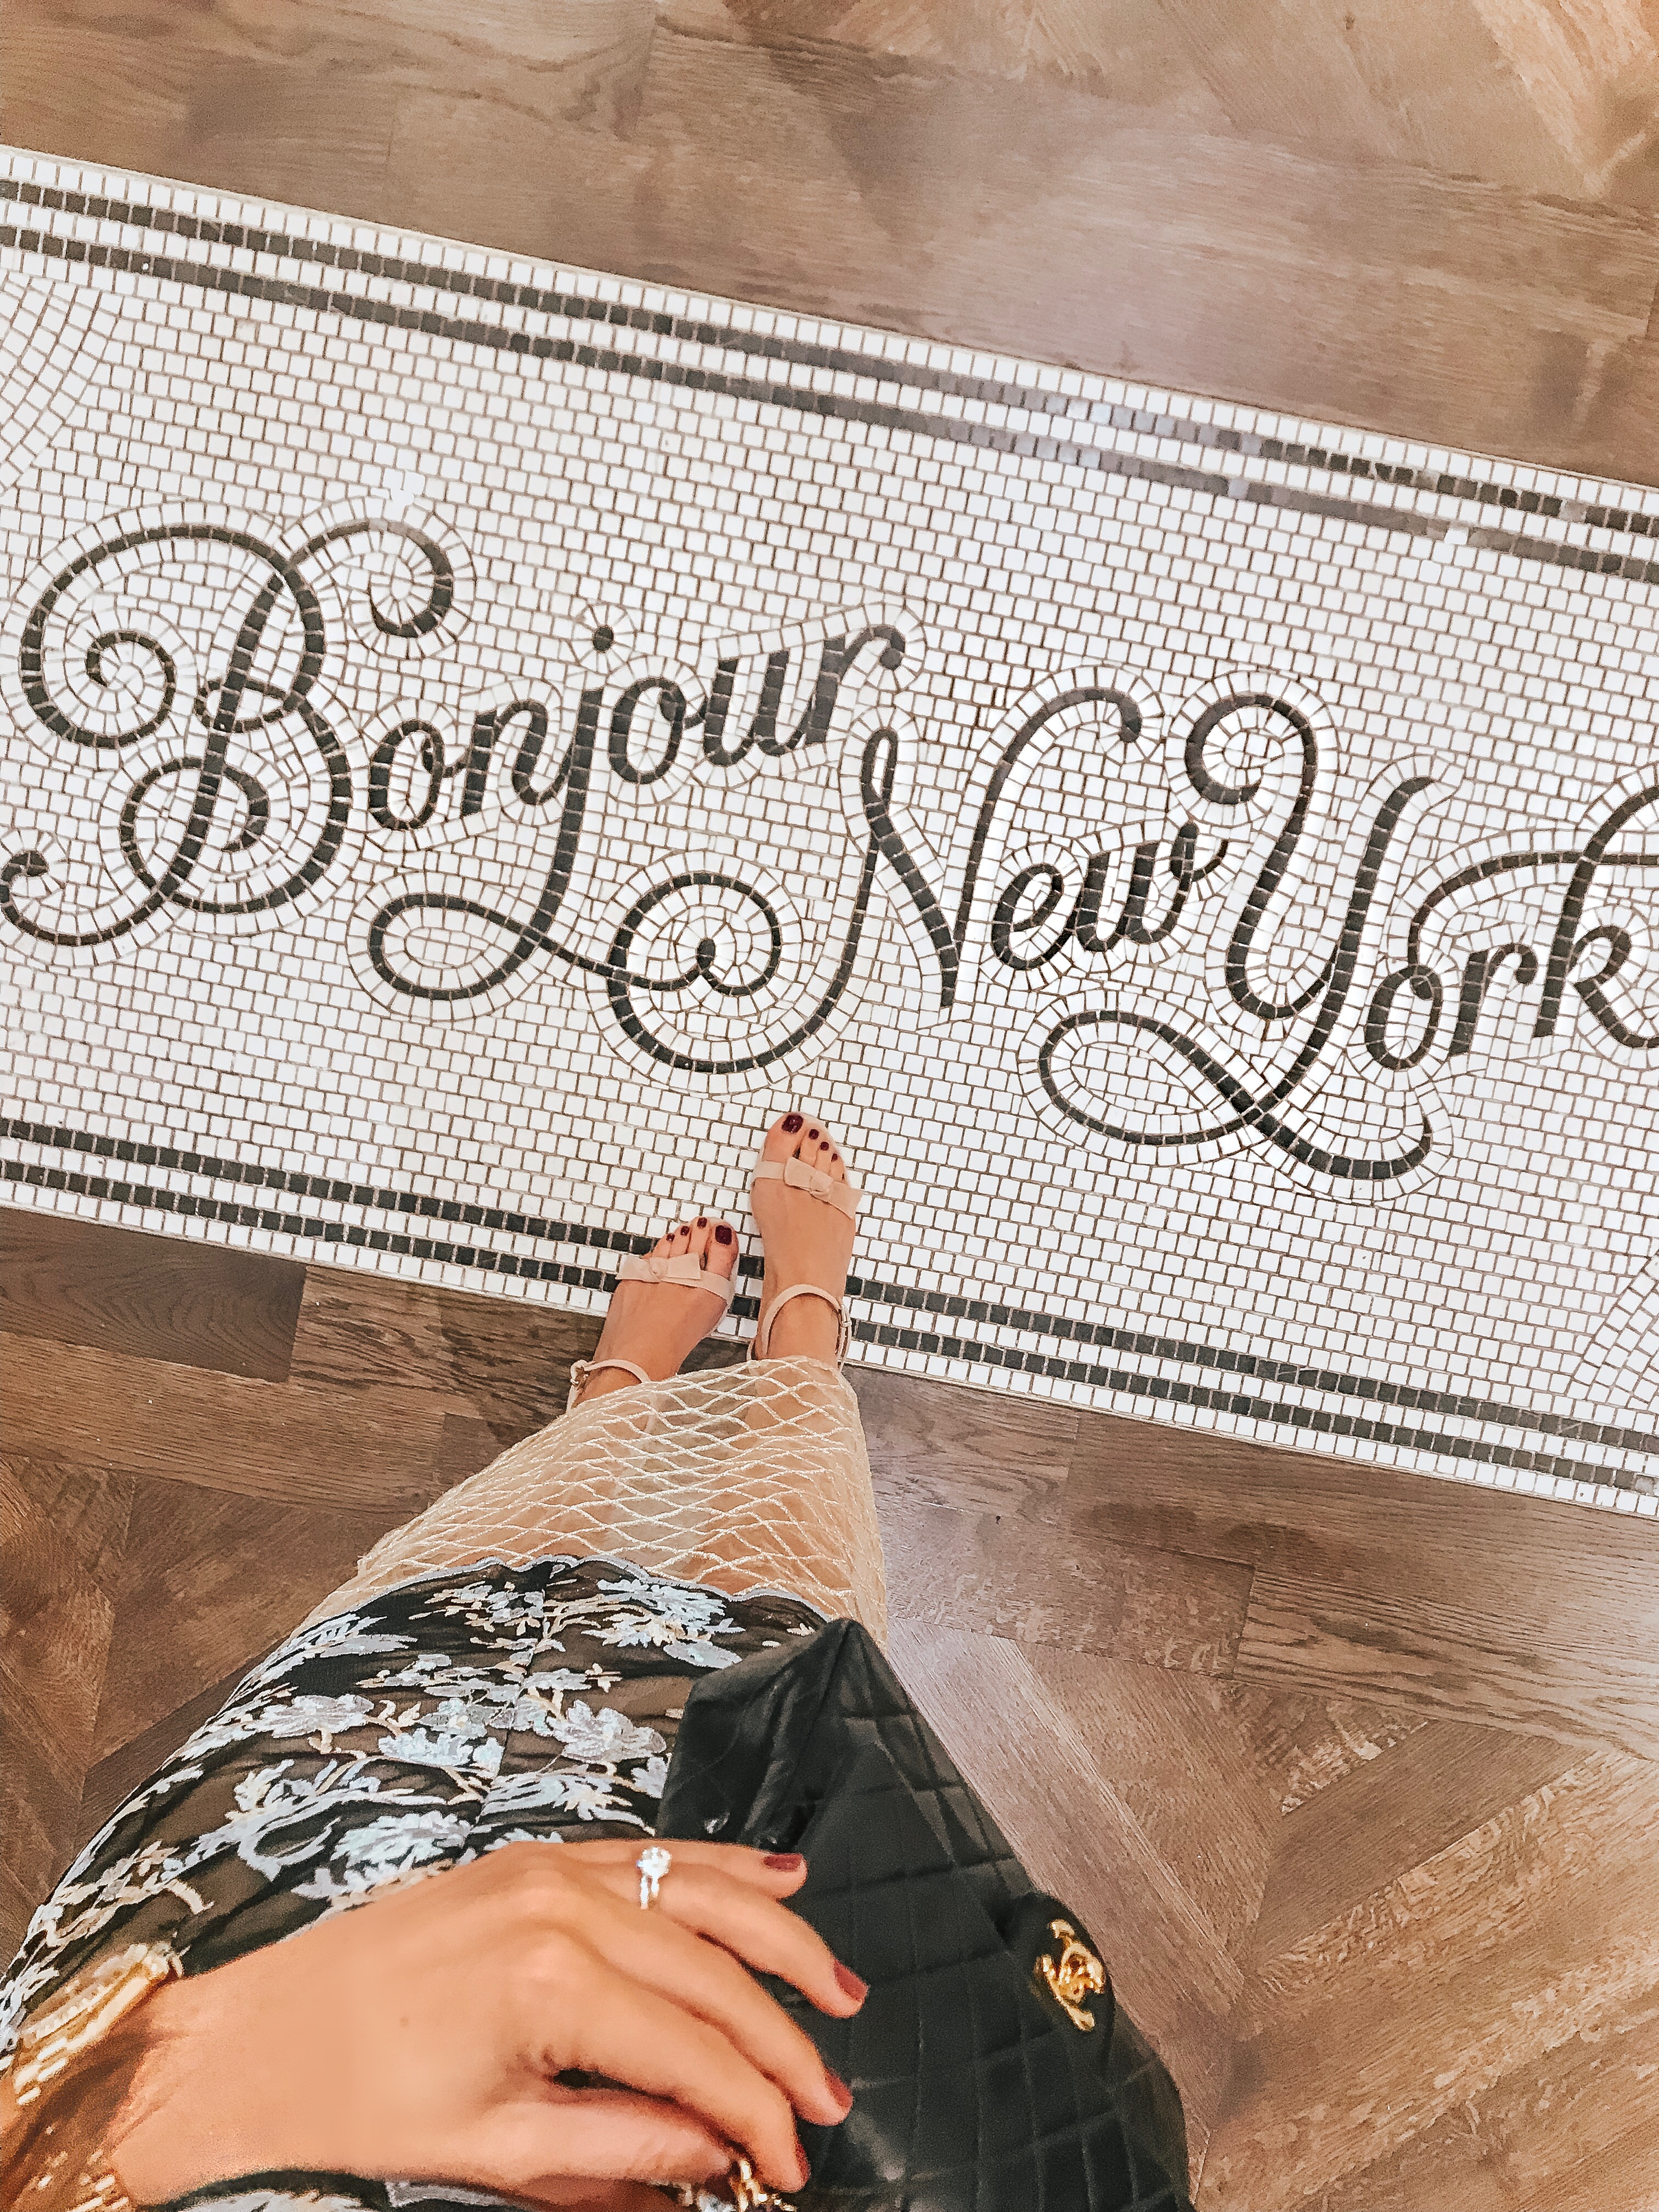 Bonjour New York Floor NYC